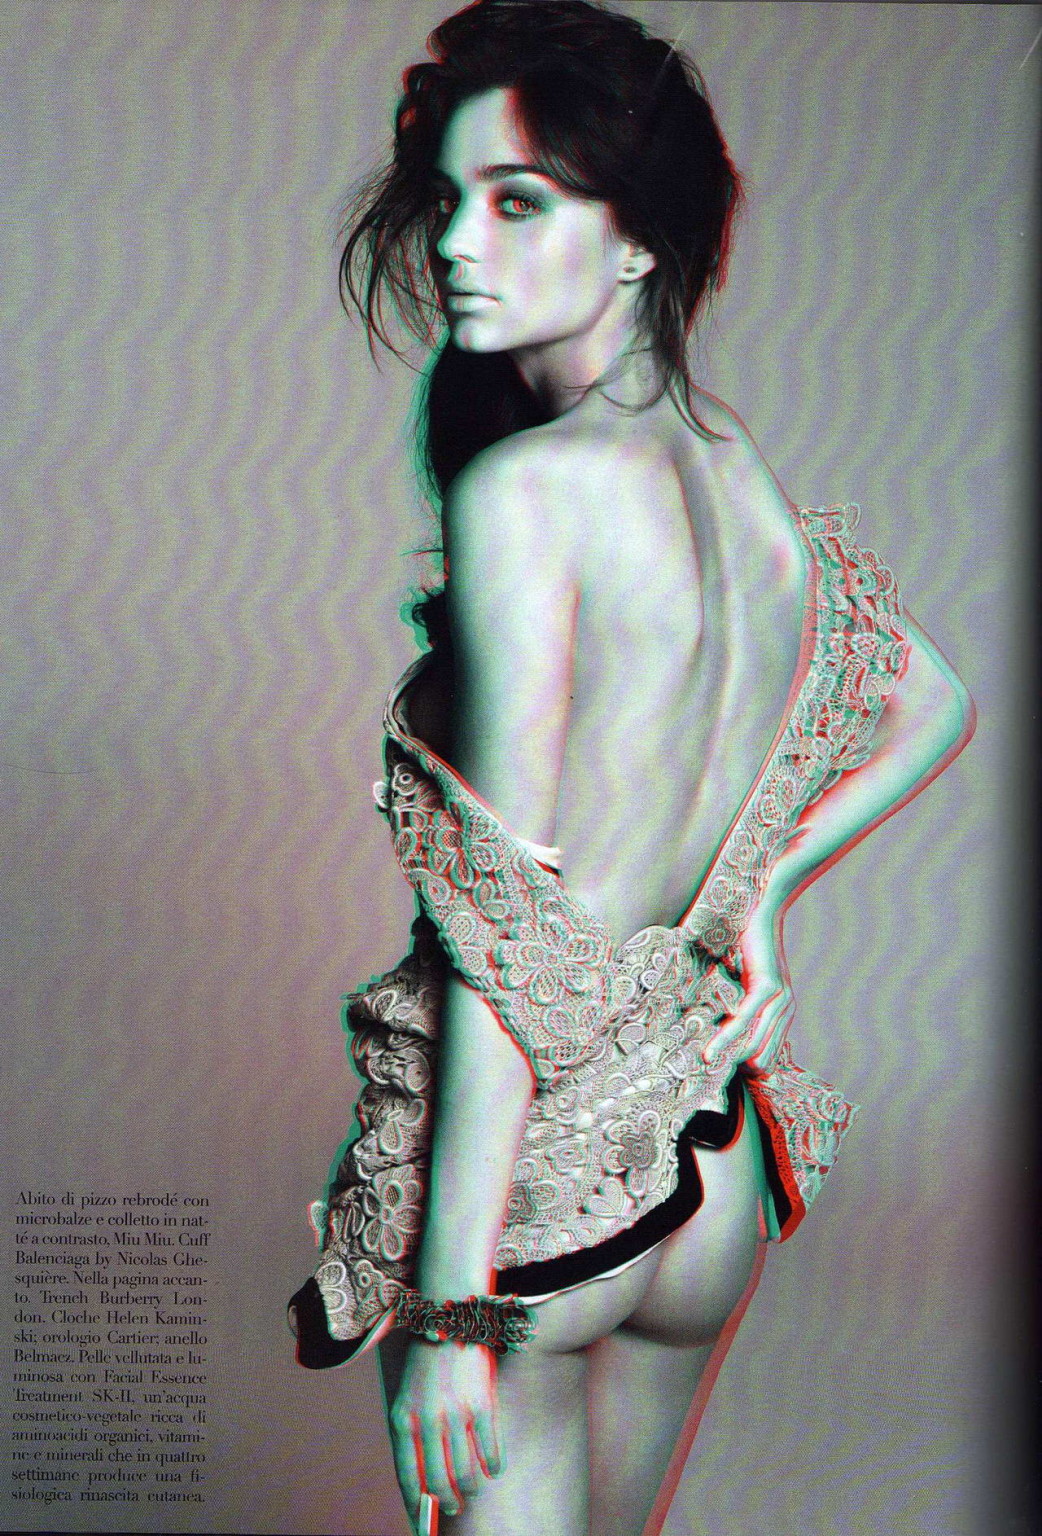 Miranda kerr posando desnuda para la revista vogue italiana - número 3-d de septiembre
 #75335111